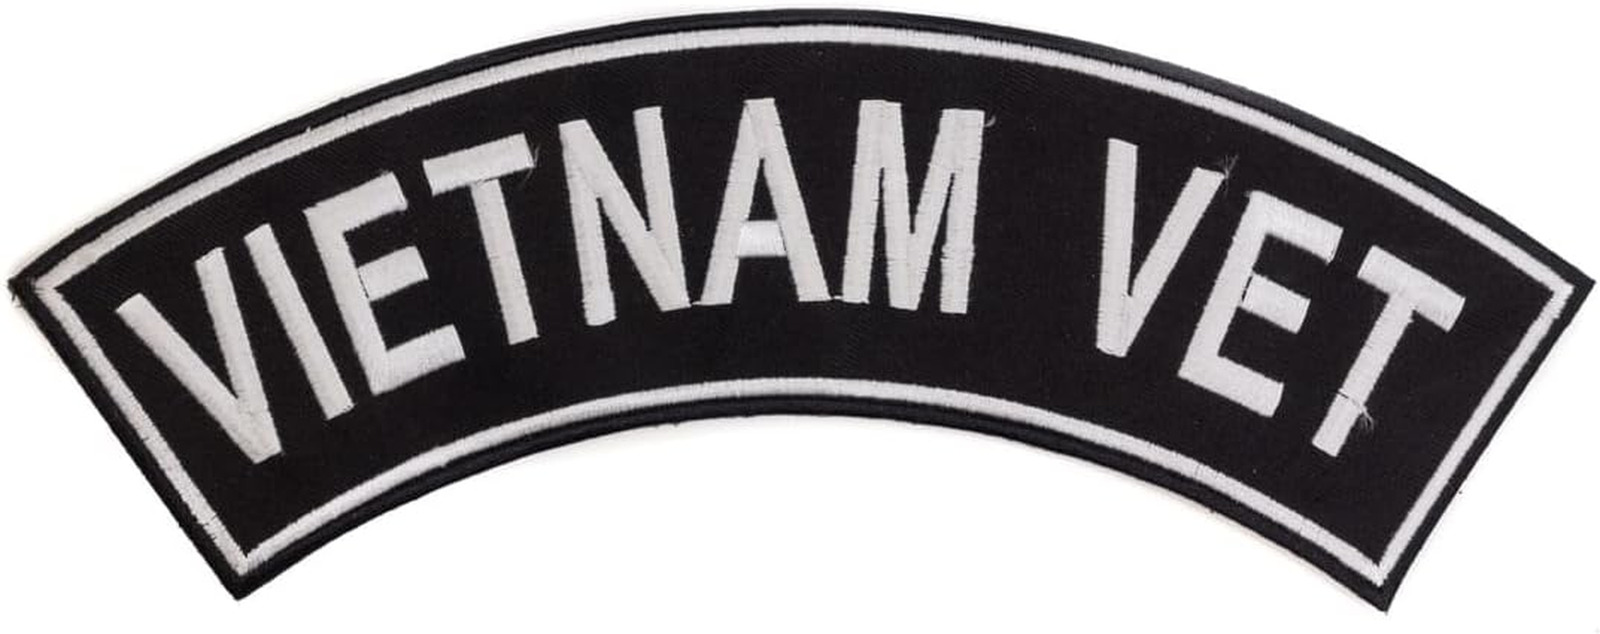 Vietnam Vet Black W/White Top Rocker Iron on Patch for Motorcycle Rider or Biker